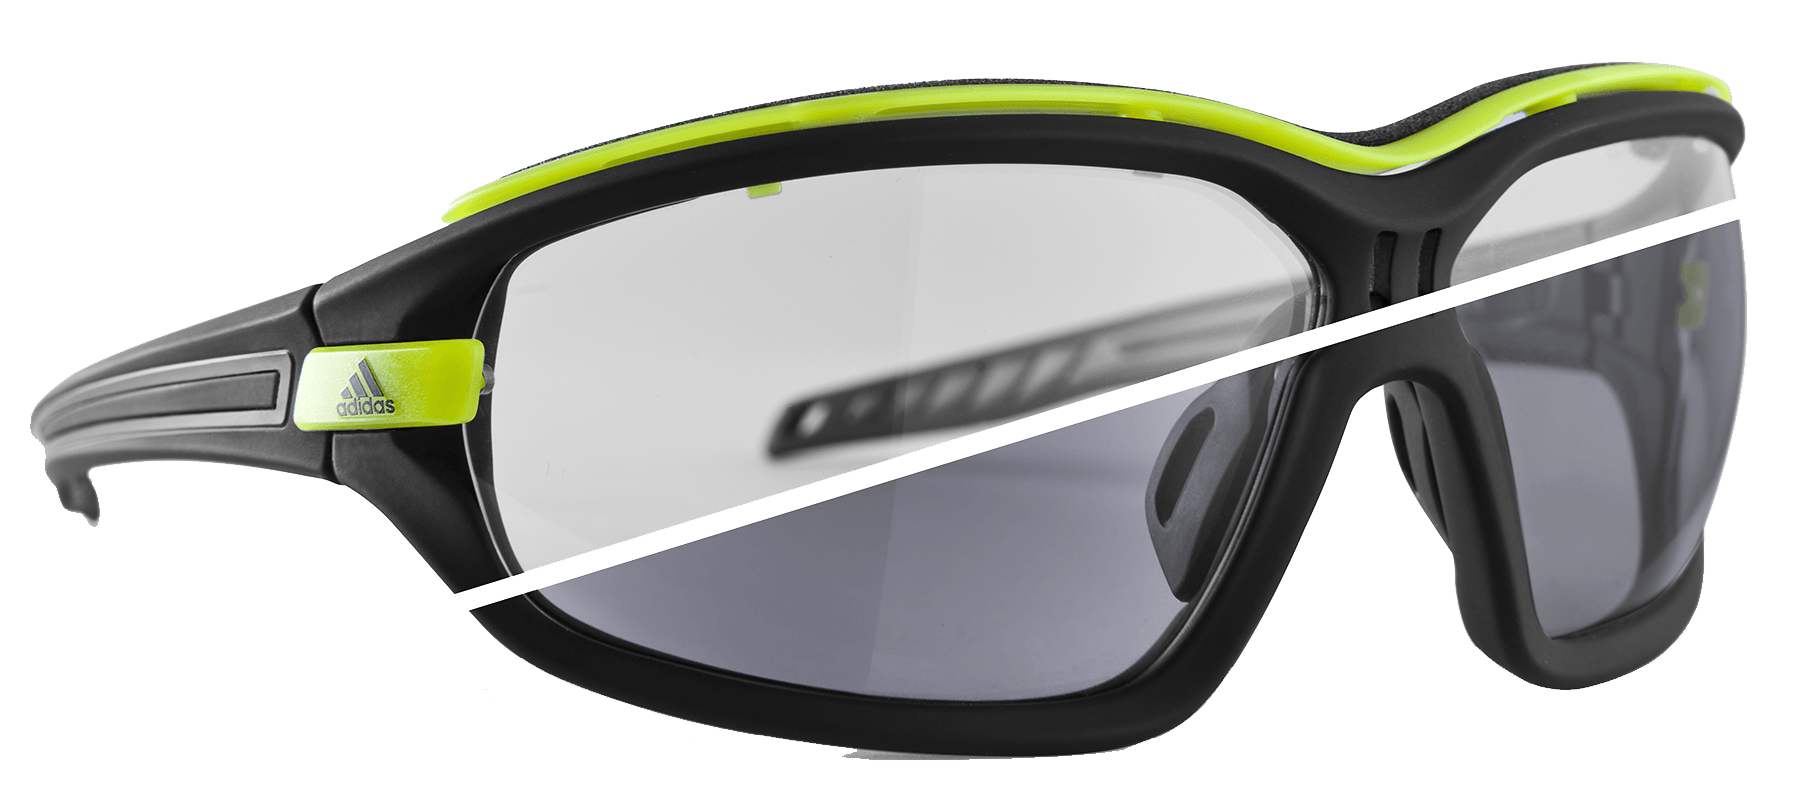 commando Astrolabium Poging Review: Adidas Eyewear Evil Eye Evo Pro met vario lenzen - Gearlimits